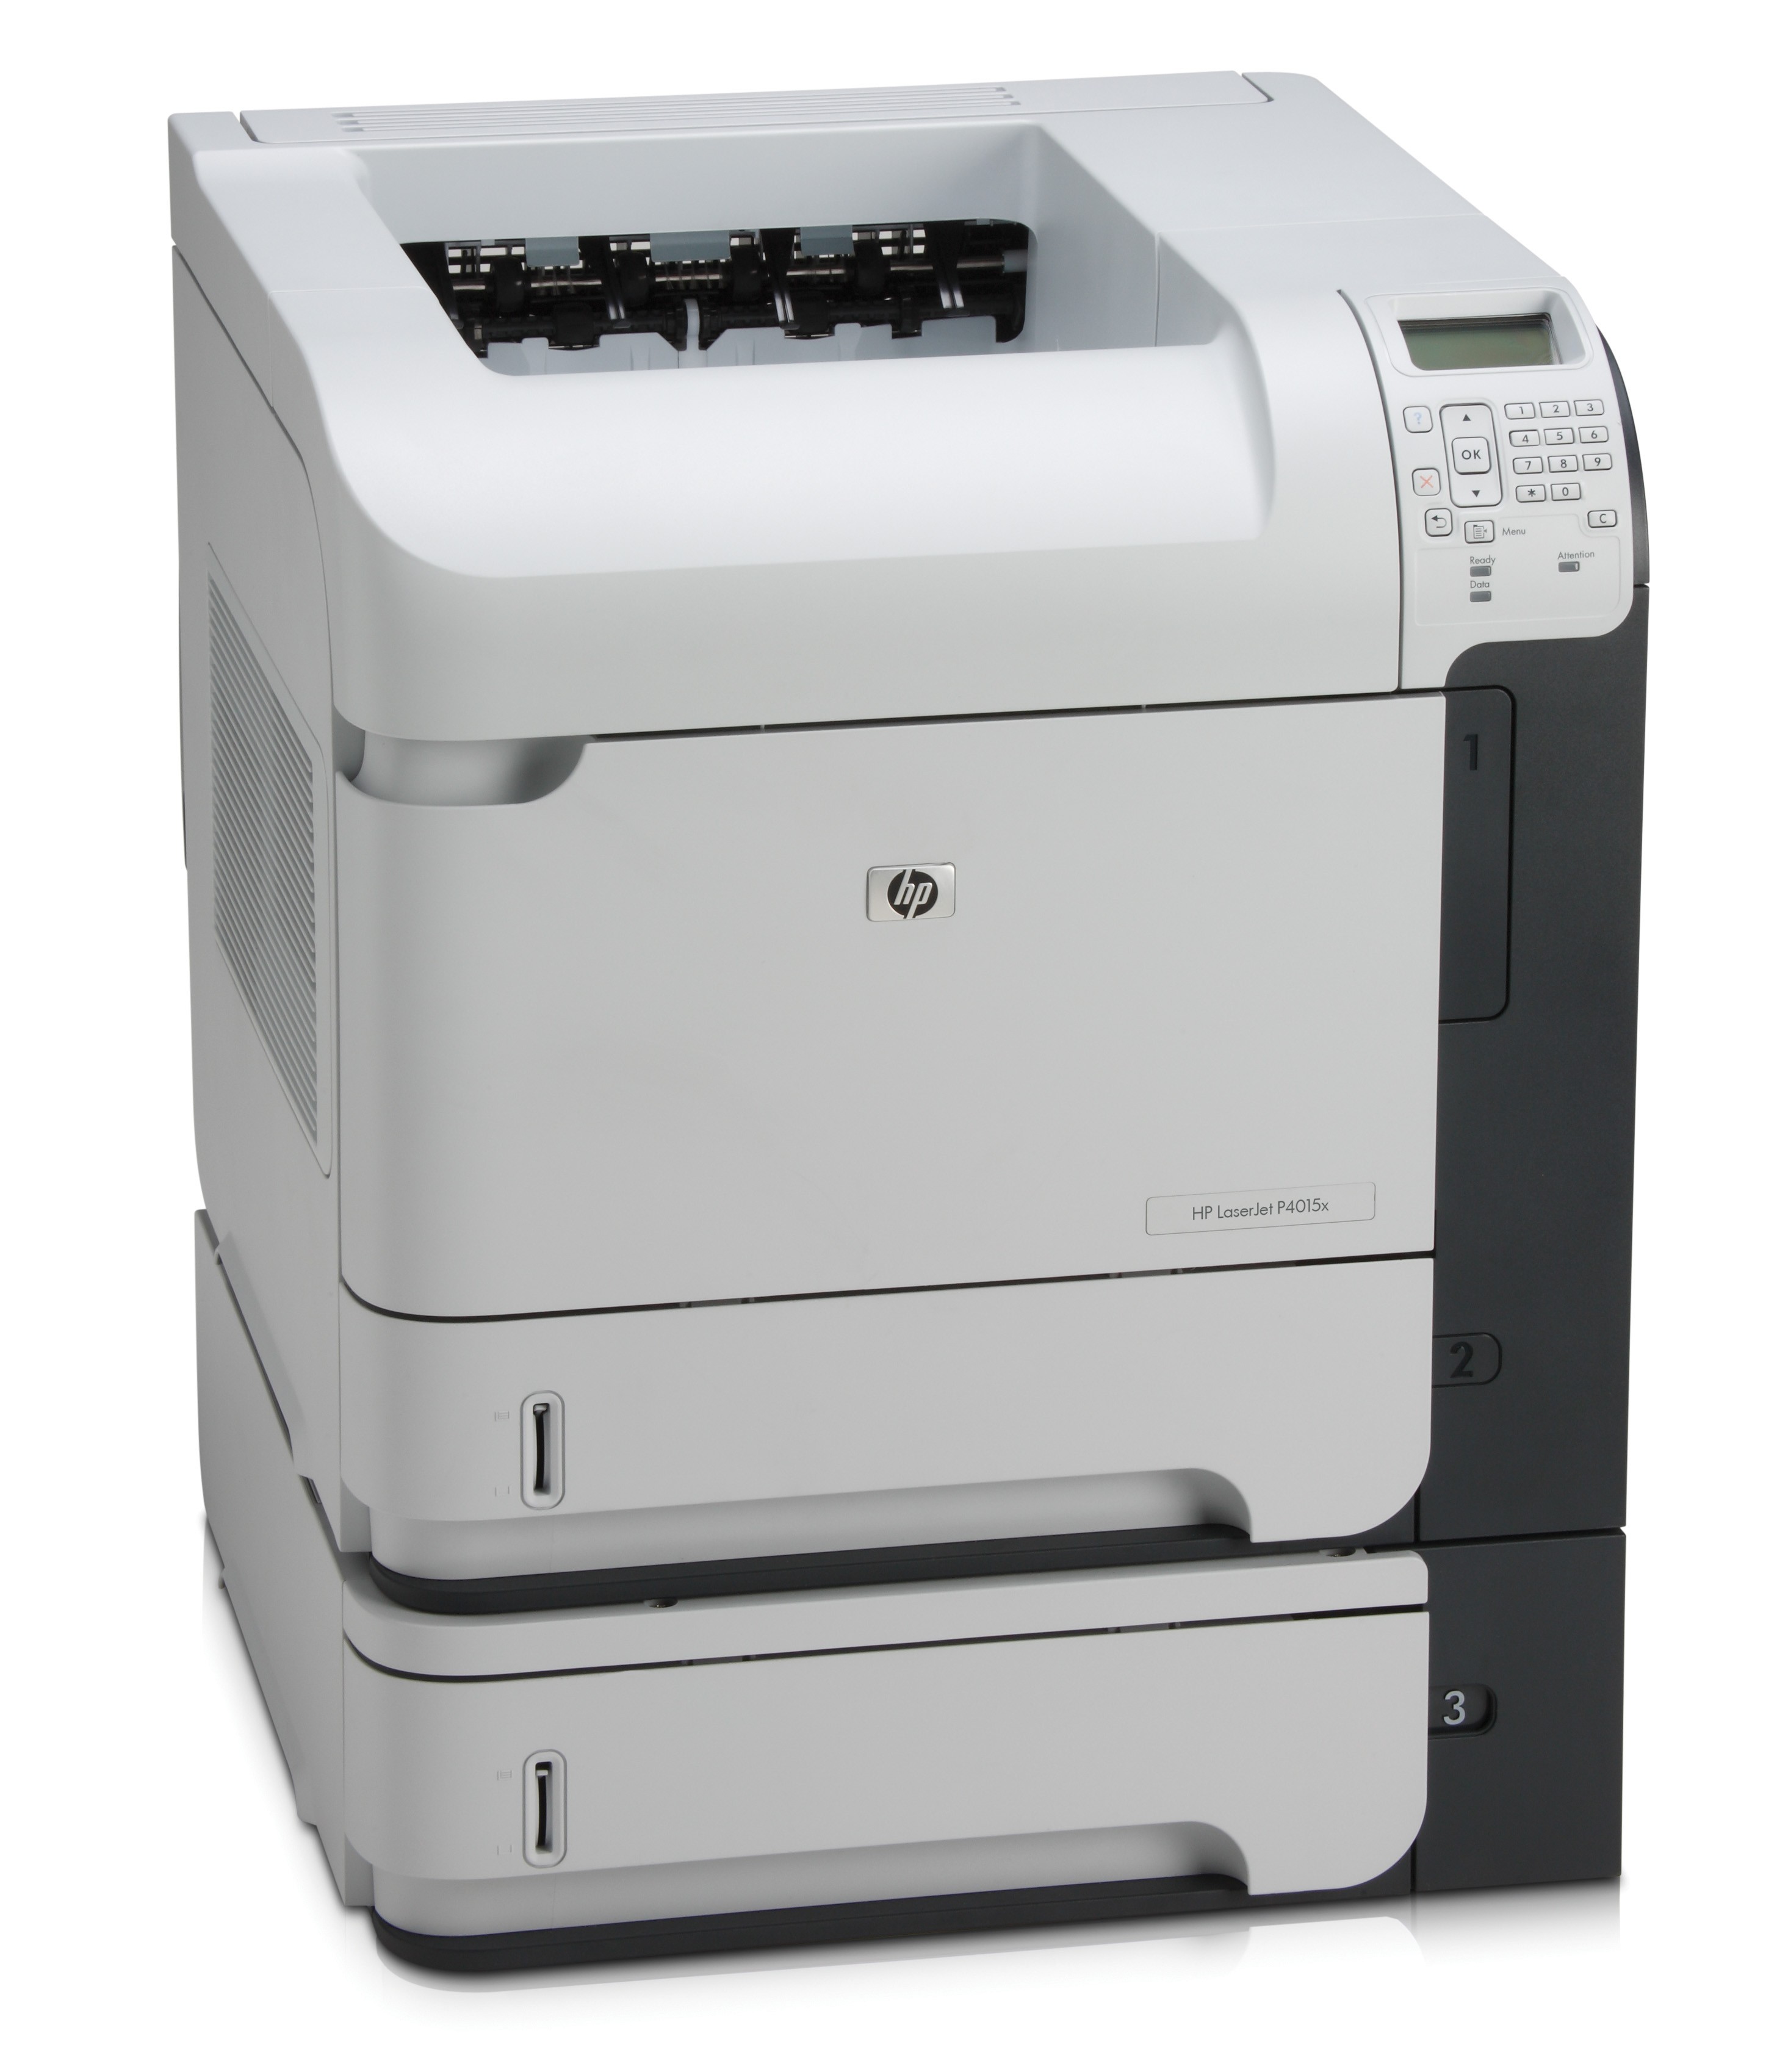 Refurbished printer HP P4015x - (HPP4015X)